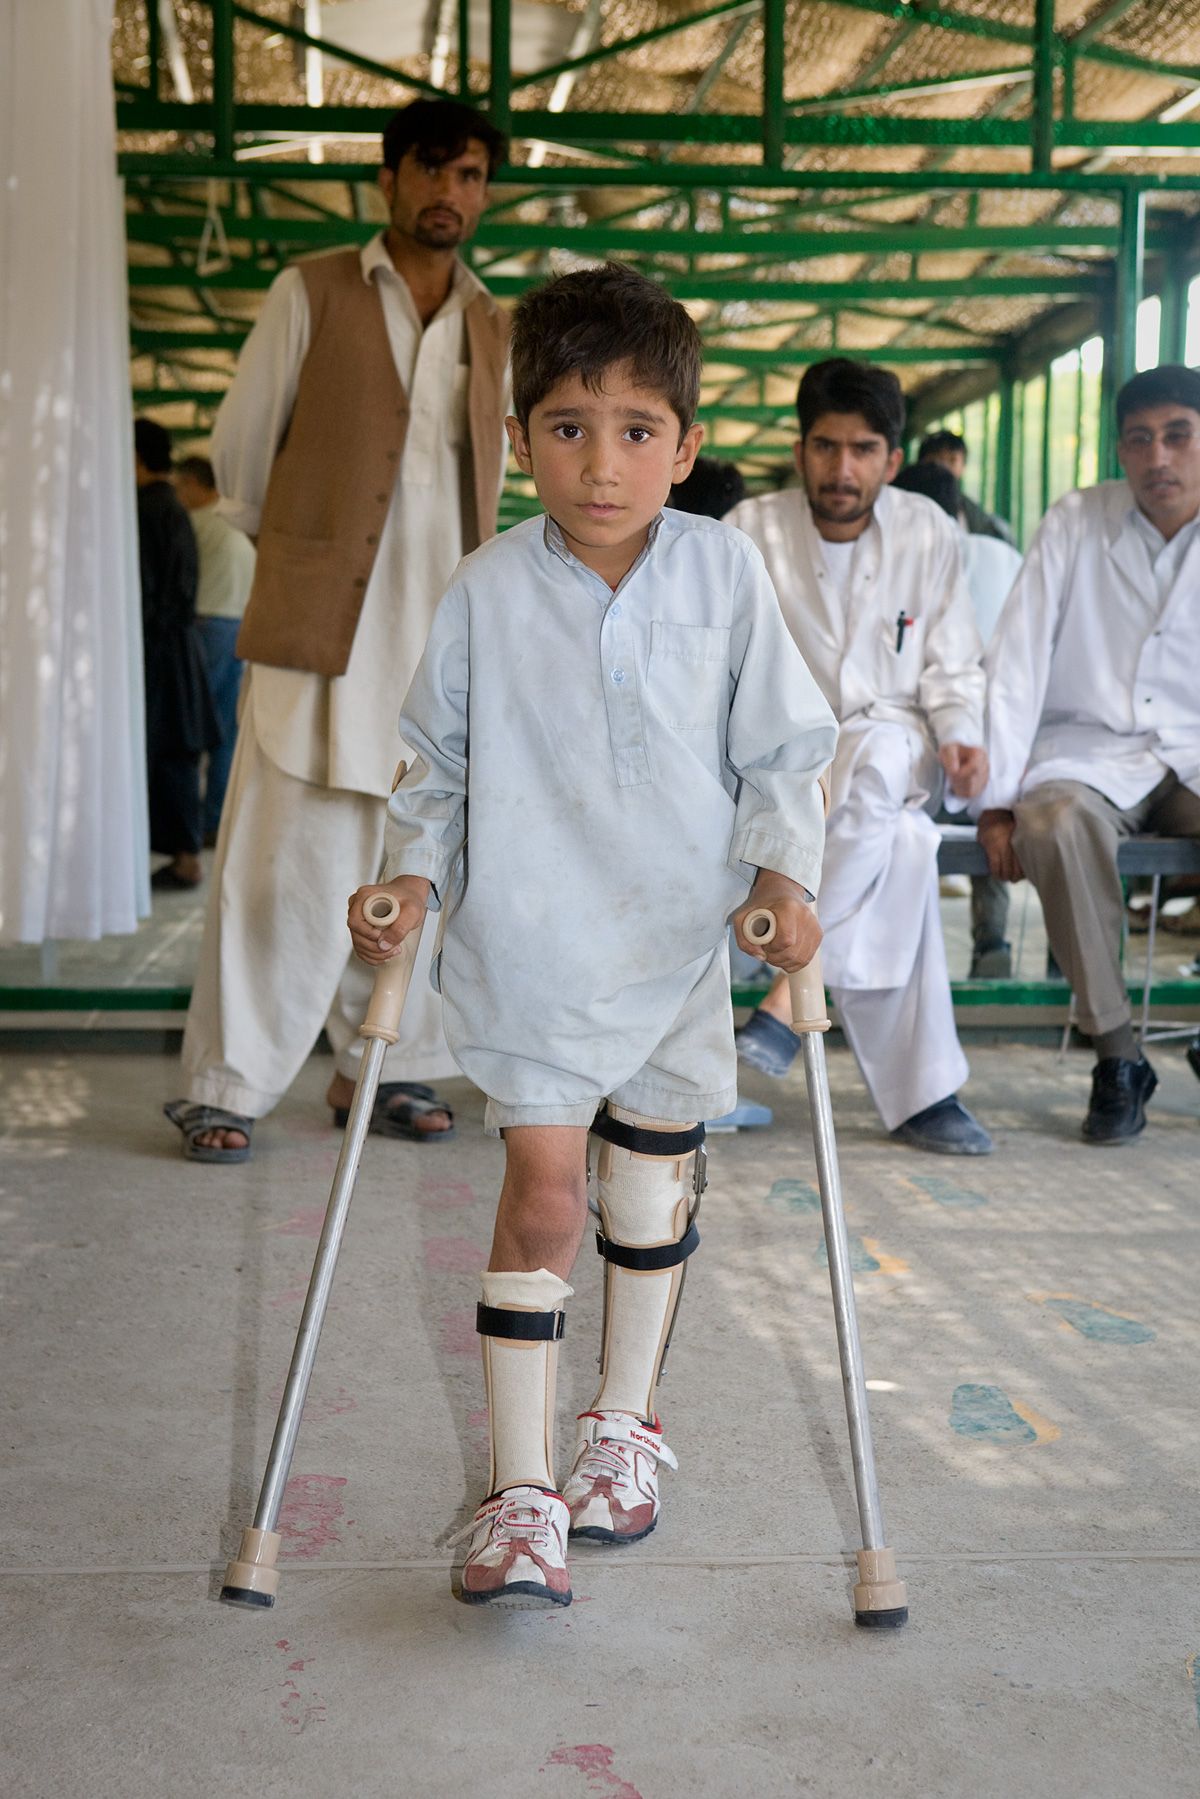 An Afghan Boy on Crutches